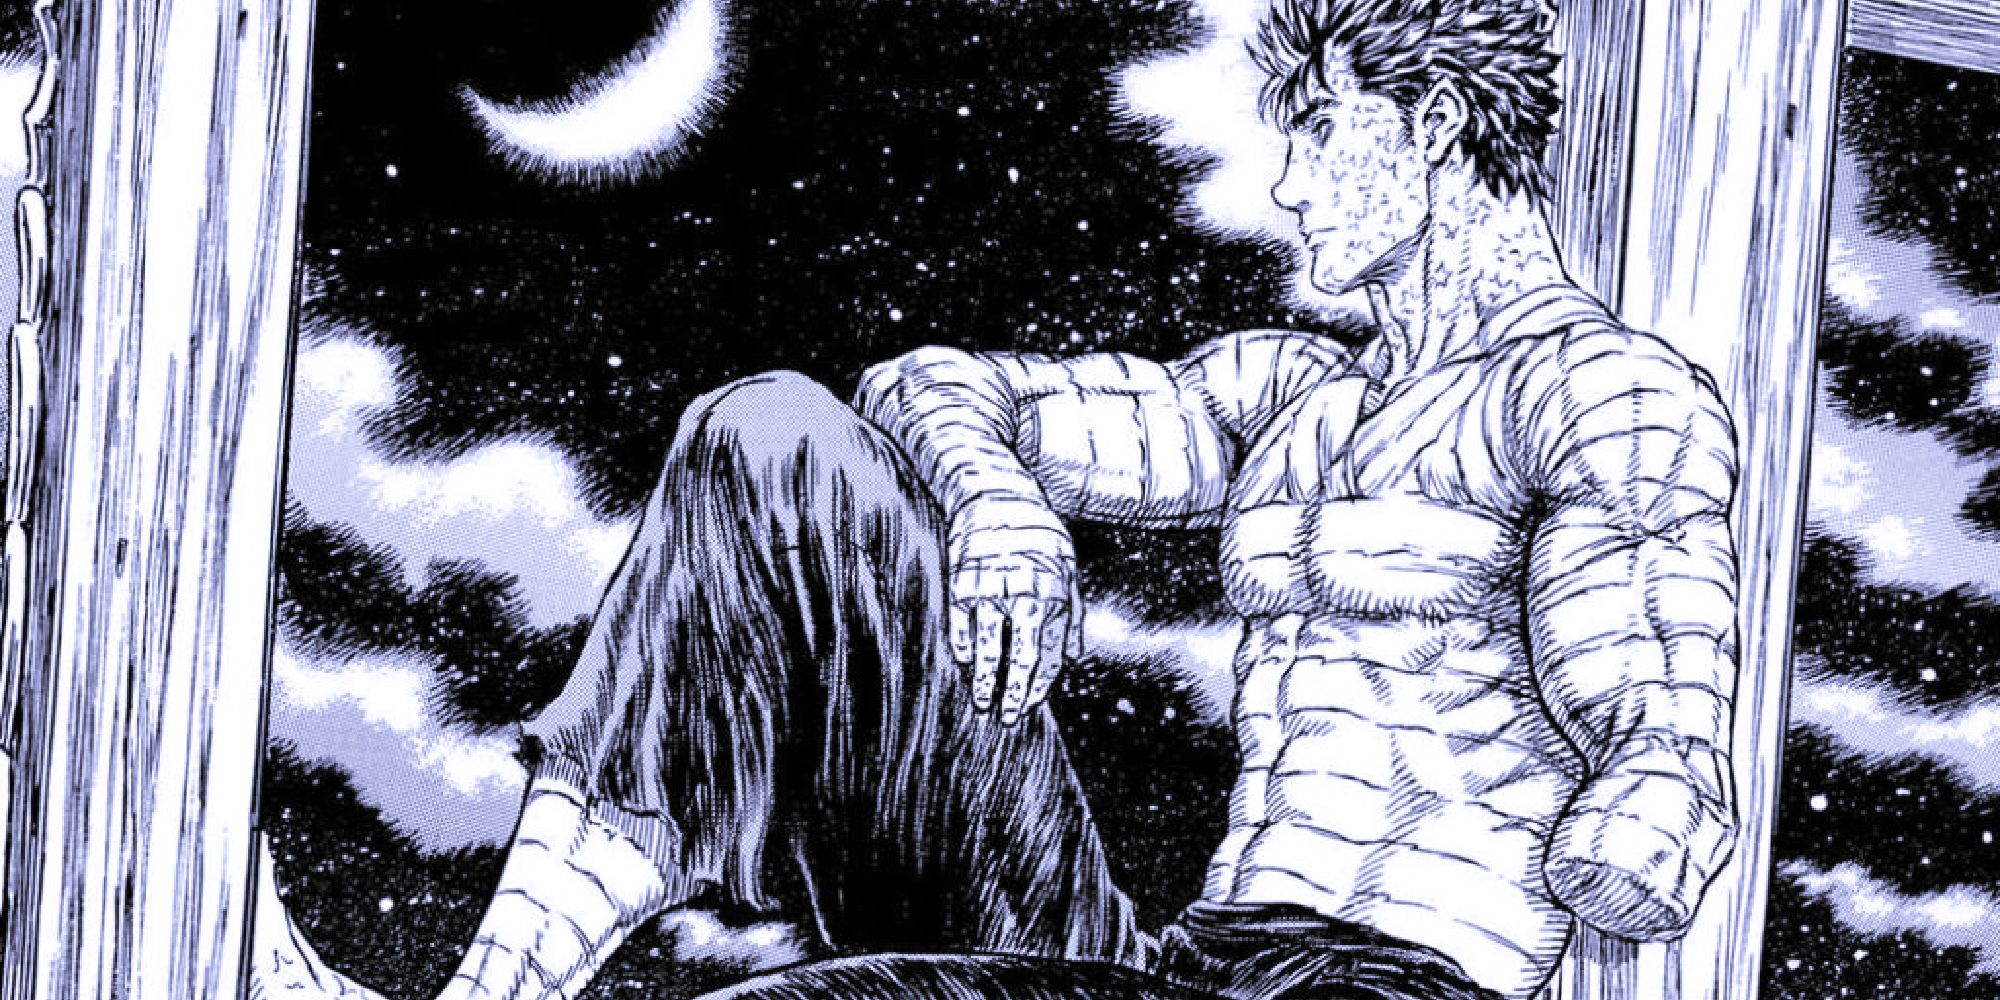 Berserk' Manga Will Continue On Following Kentaro Miura's Death